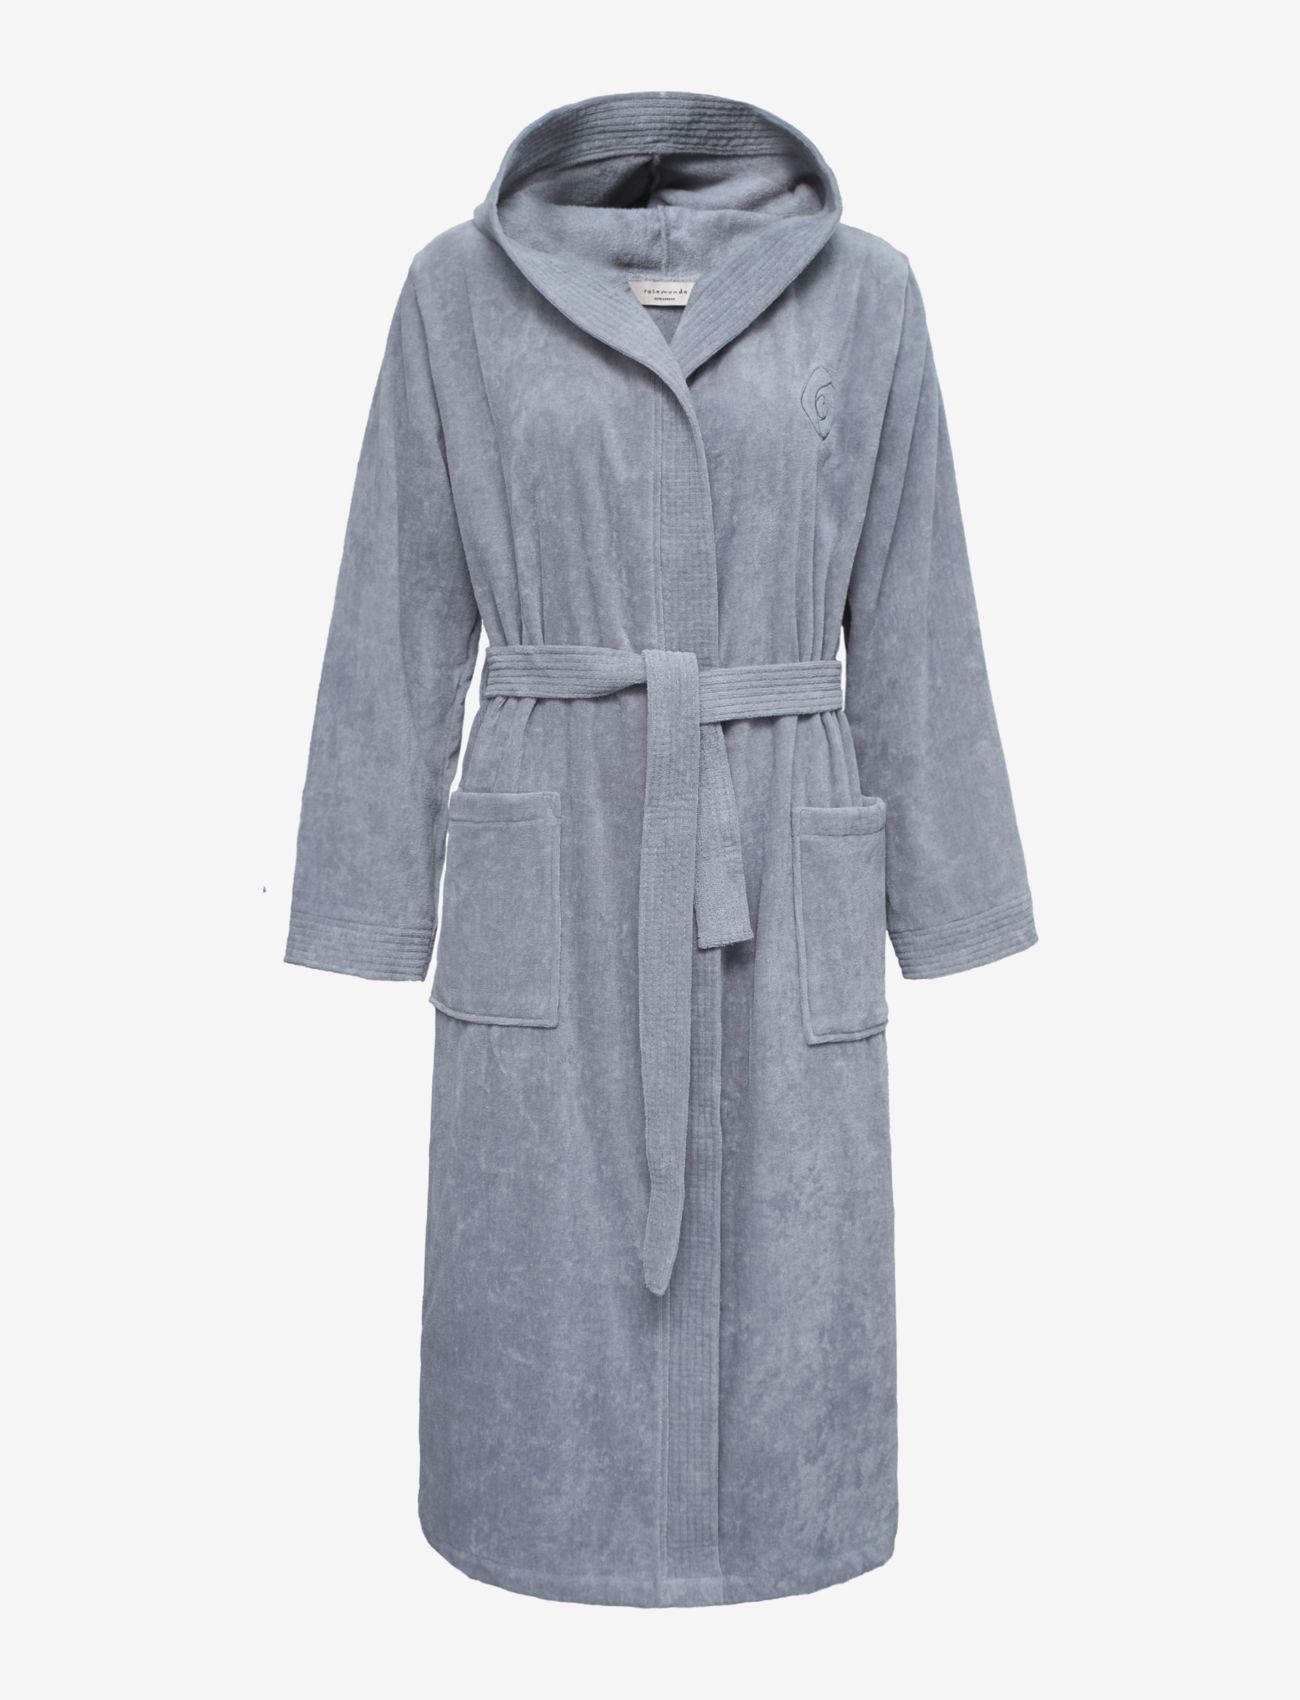 Rosemunde - robe - undertøy - charcoal grey - 1